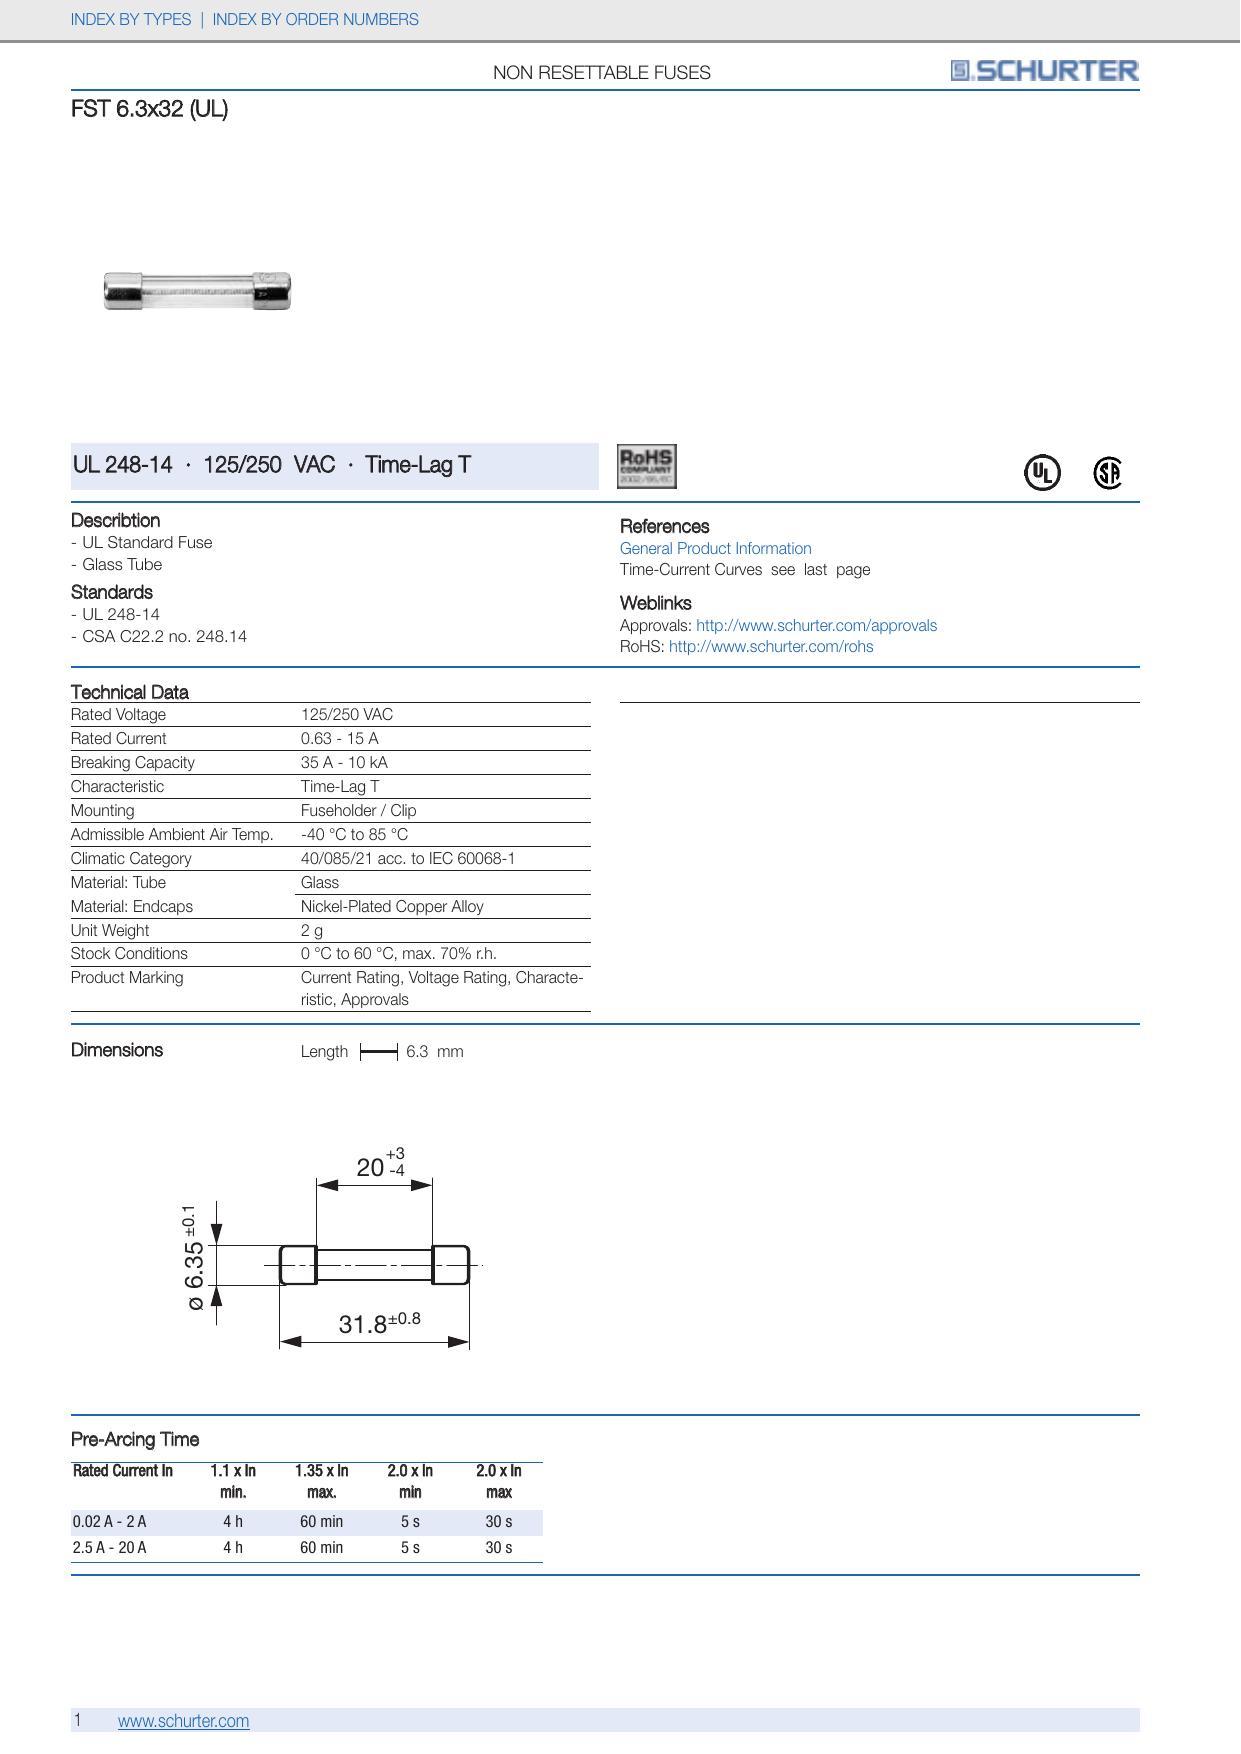 fst-63x32-ul-non-resettable-fuses.pdf